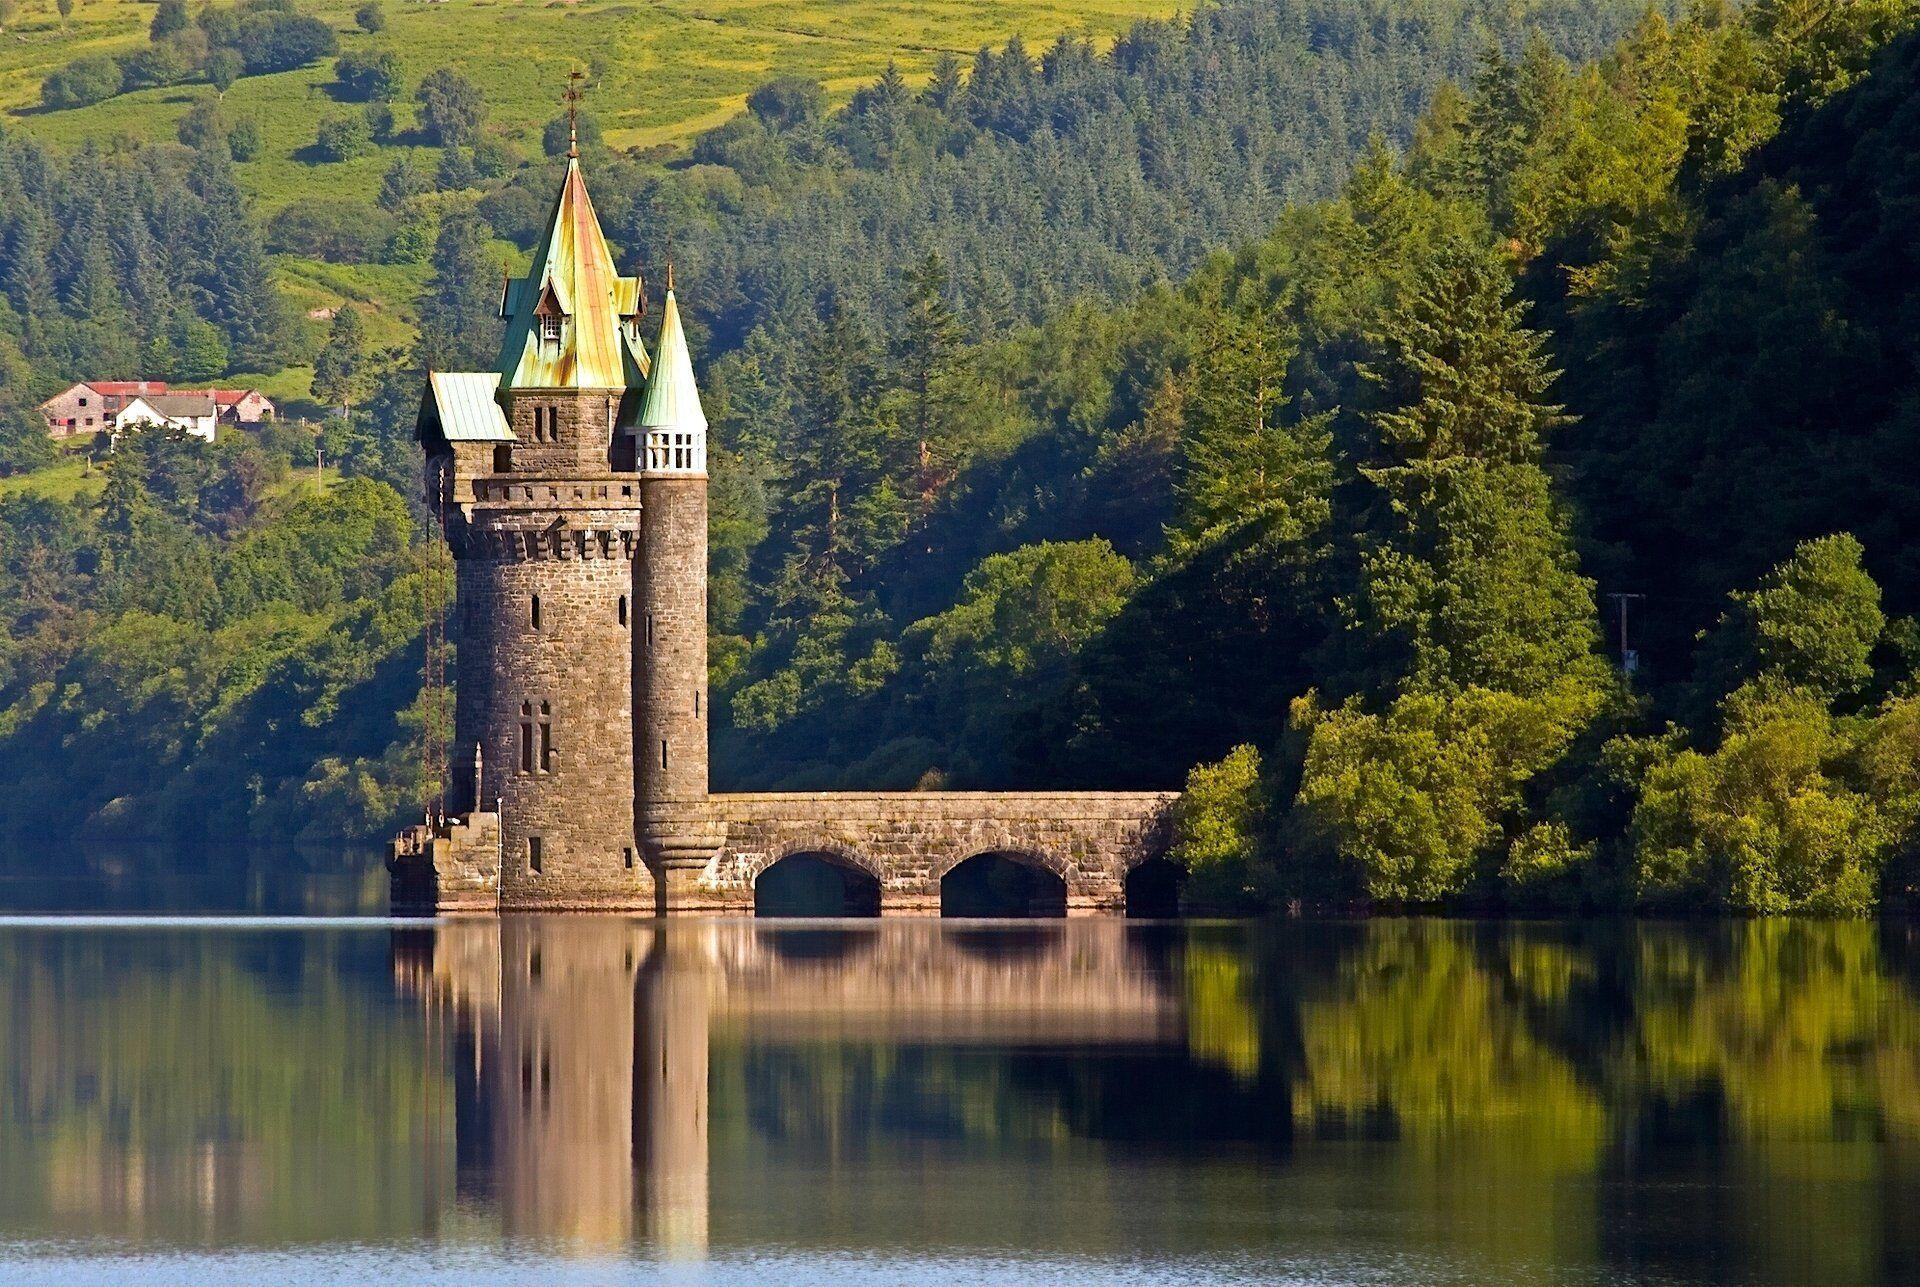 lake vyrnwy tower wales england lake vyrnwy wales england tower